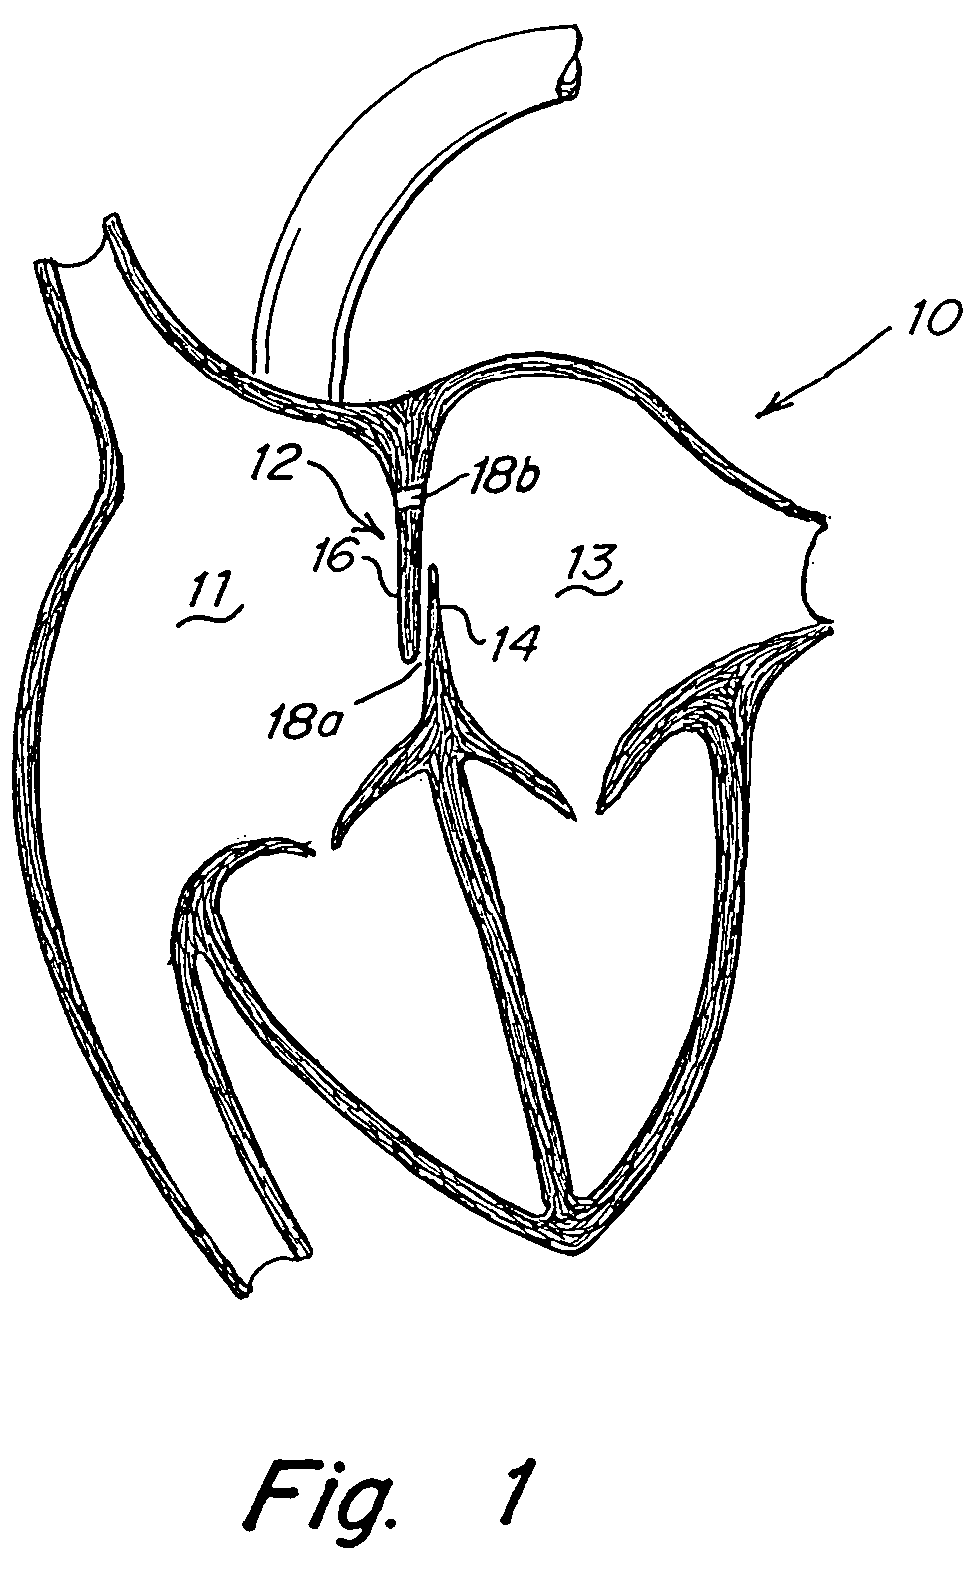 Tubular patent foramen ovale (PFO) closure device with catch system